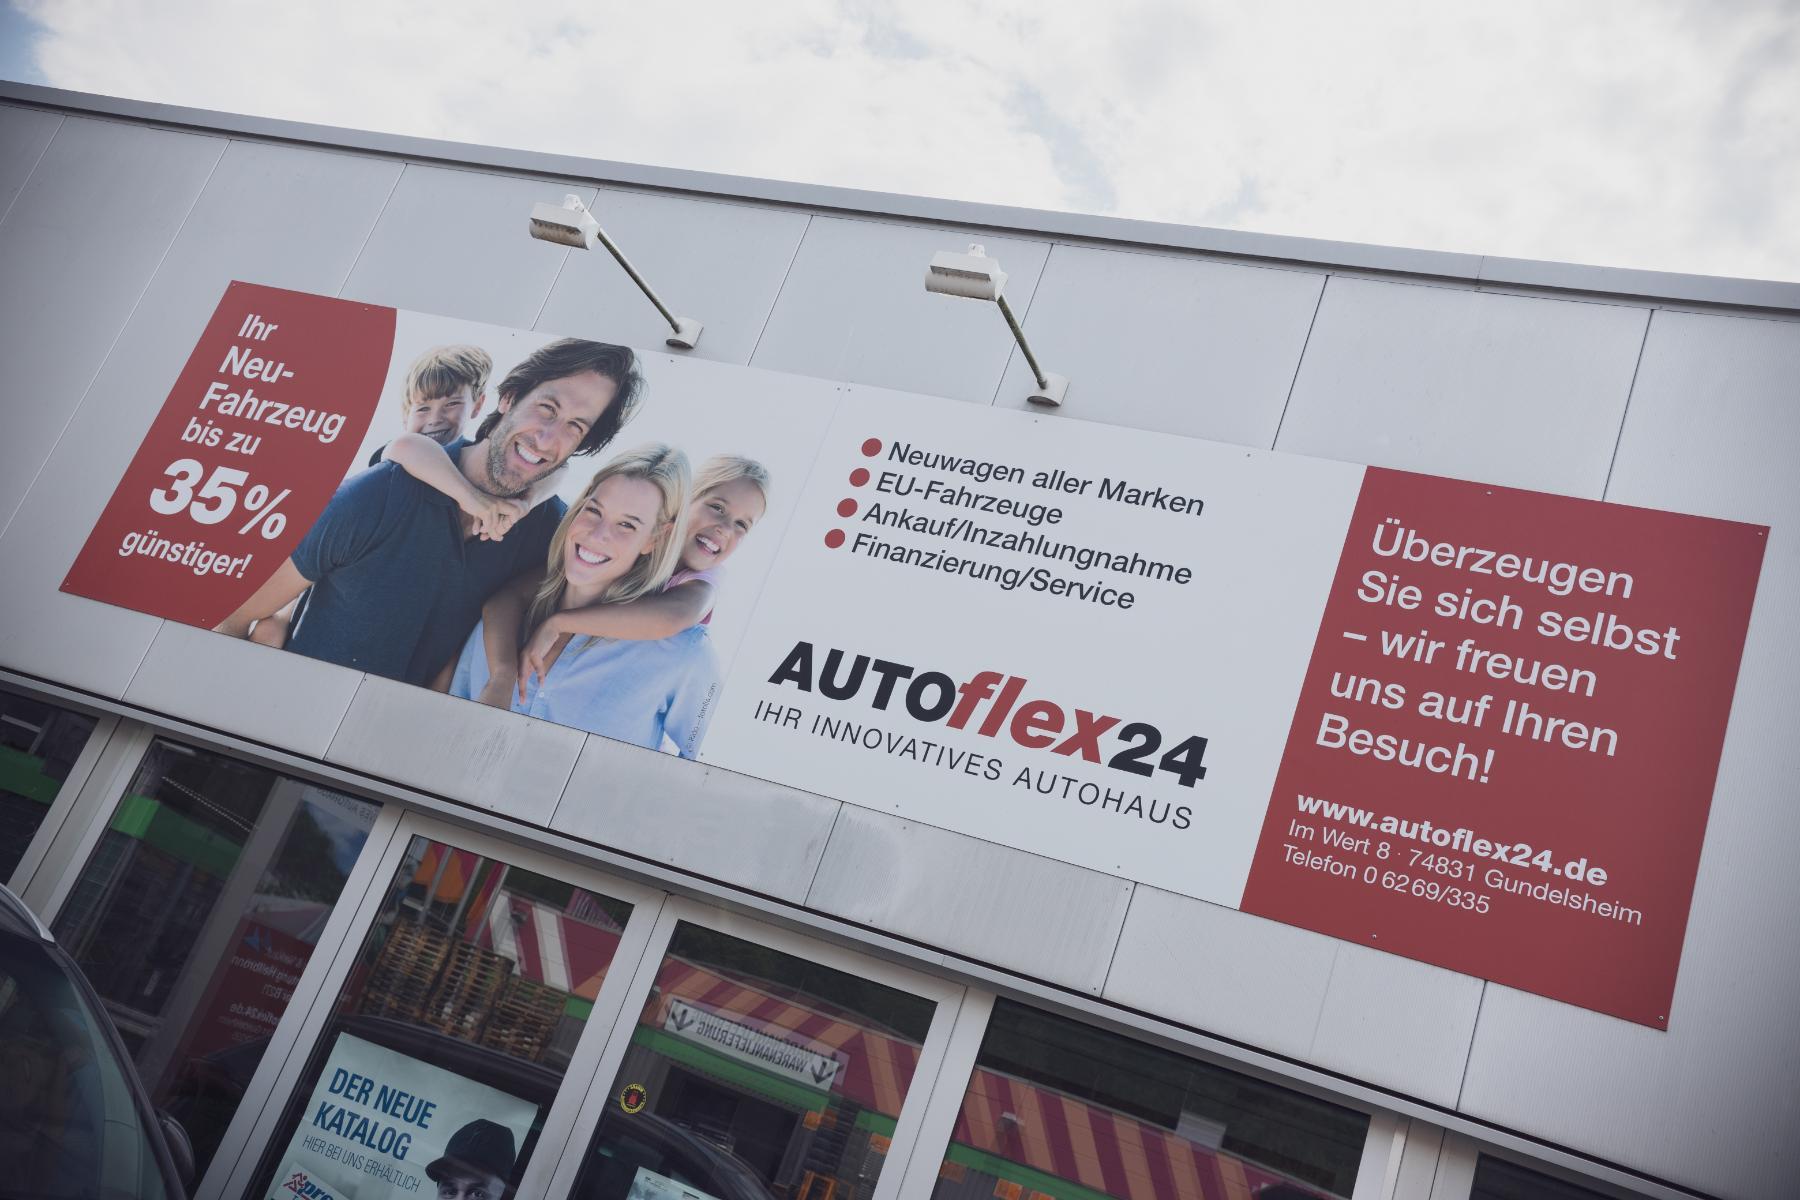 Autrado Lieferant - Autolfex24